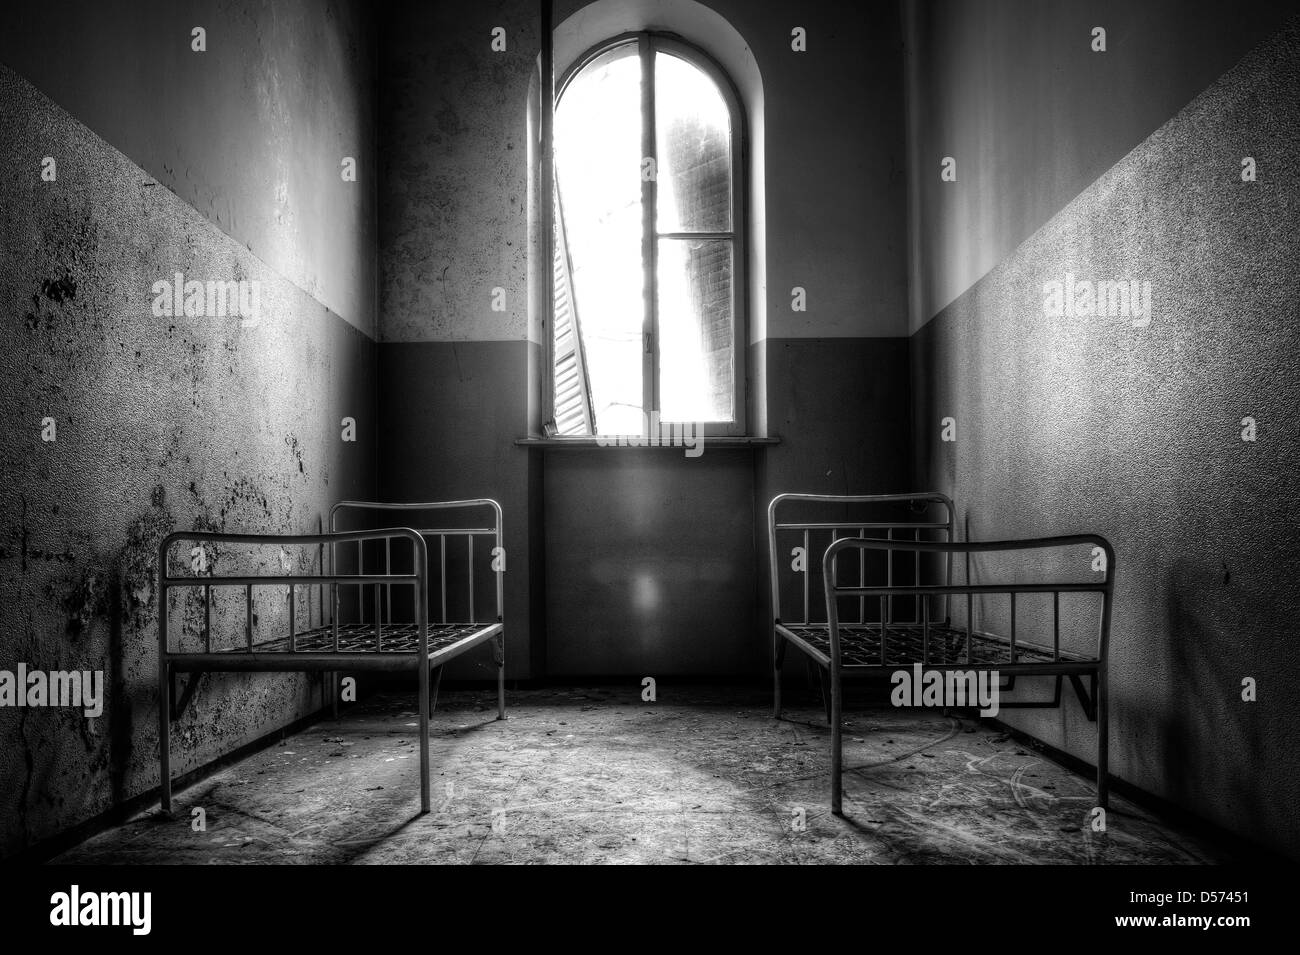 Abandoned Mental Hospital Room Stock Photo 54861325 Alamy